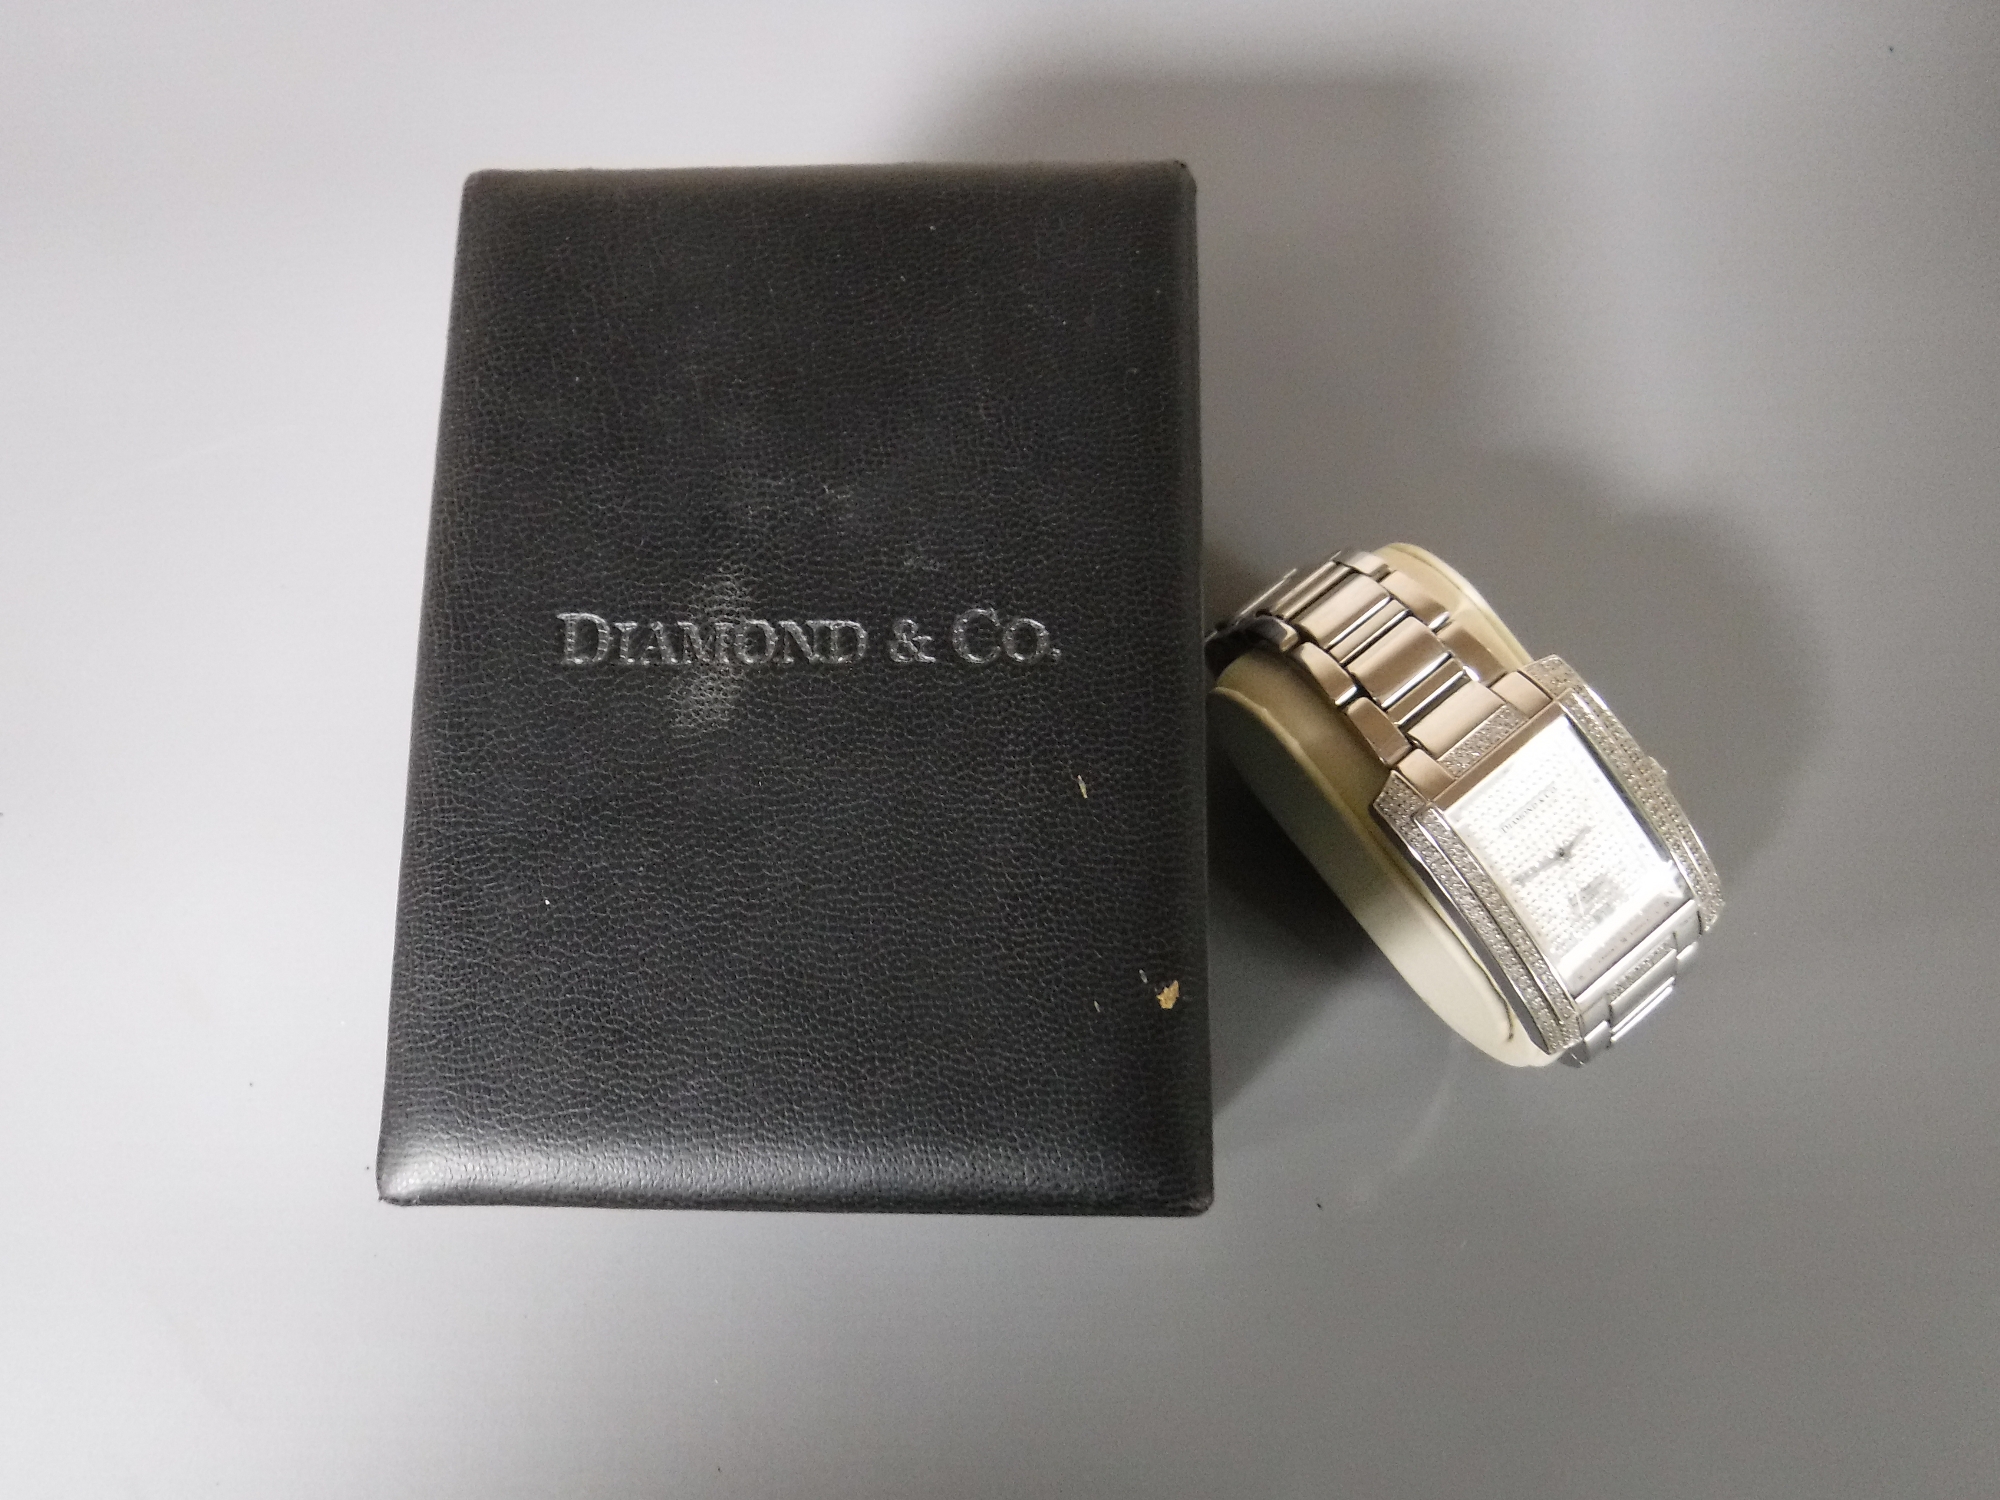 A Gents diamond set stainless-steel wristwatch, signed Diamond & Co, quartz movement,